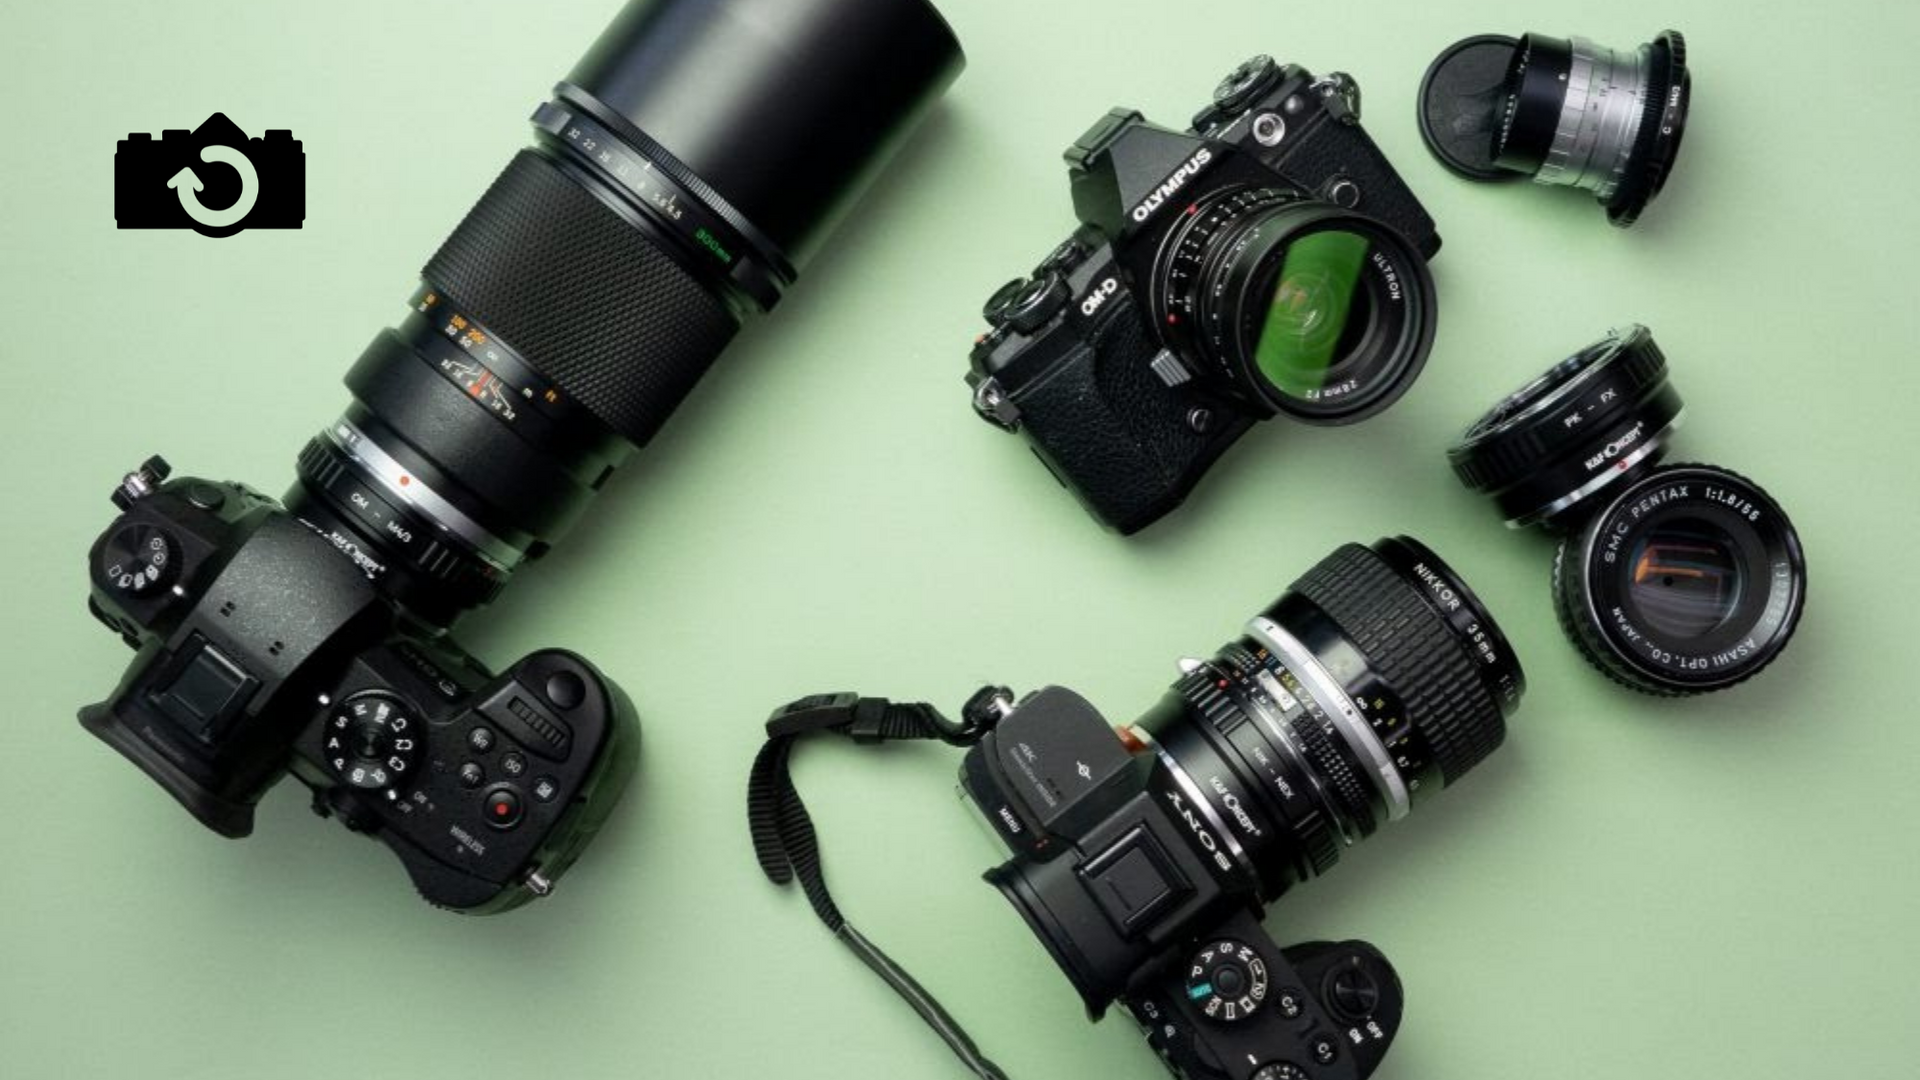 How Lens Work in Camera, Lens Mechanism